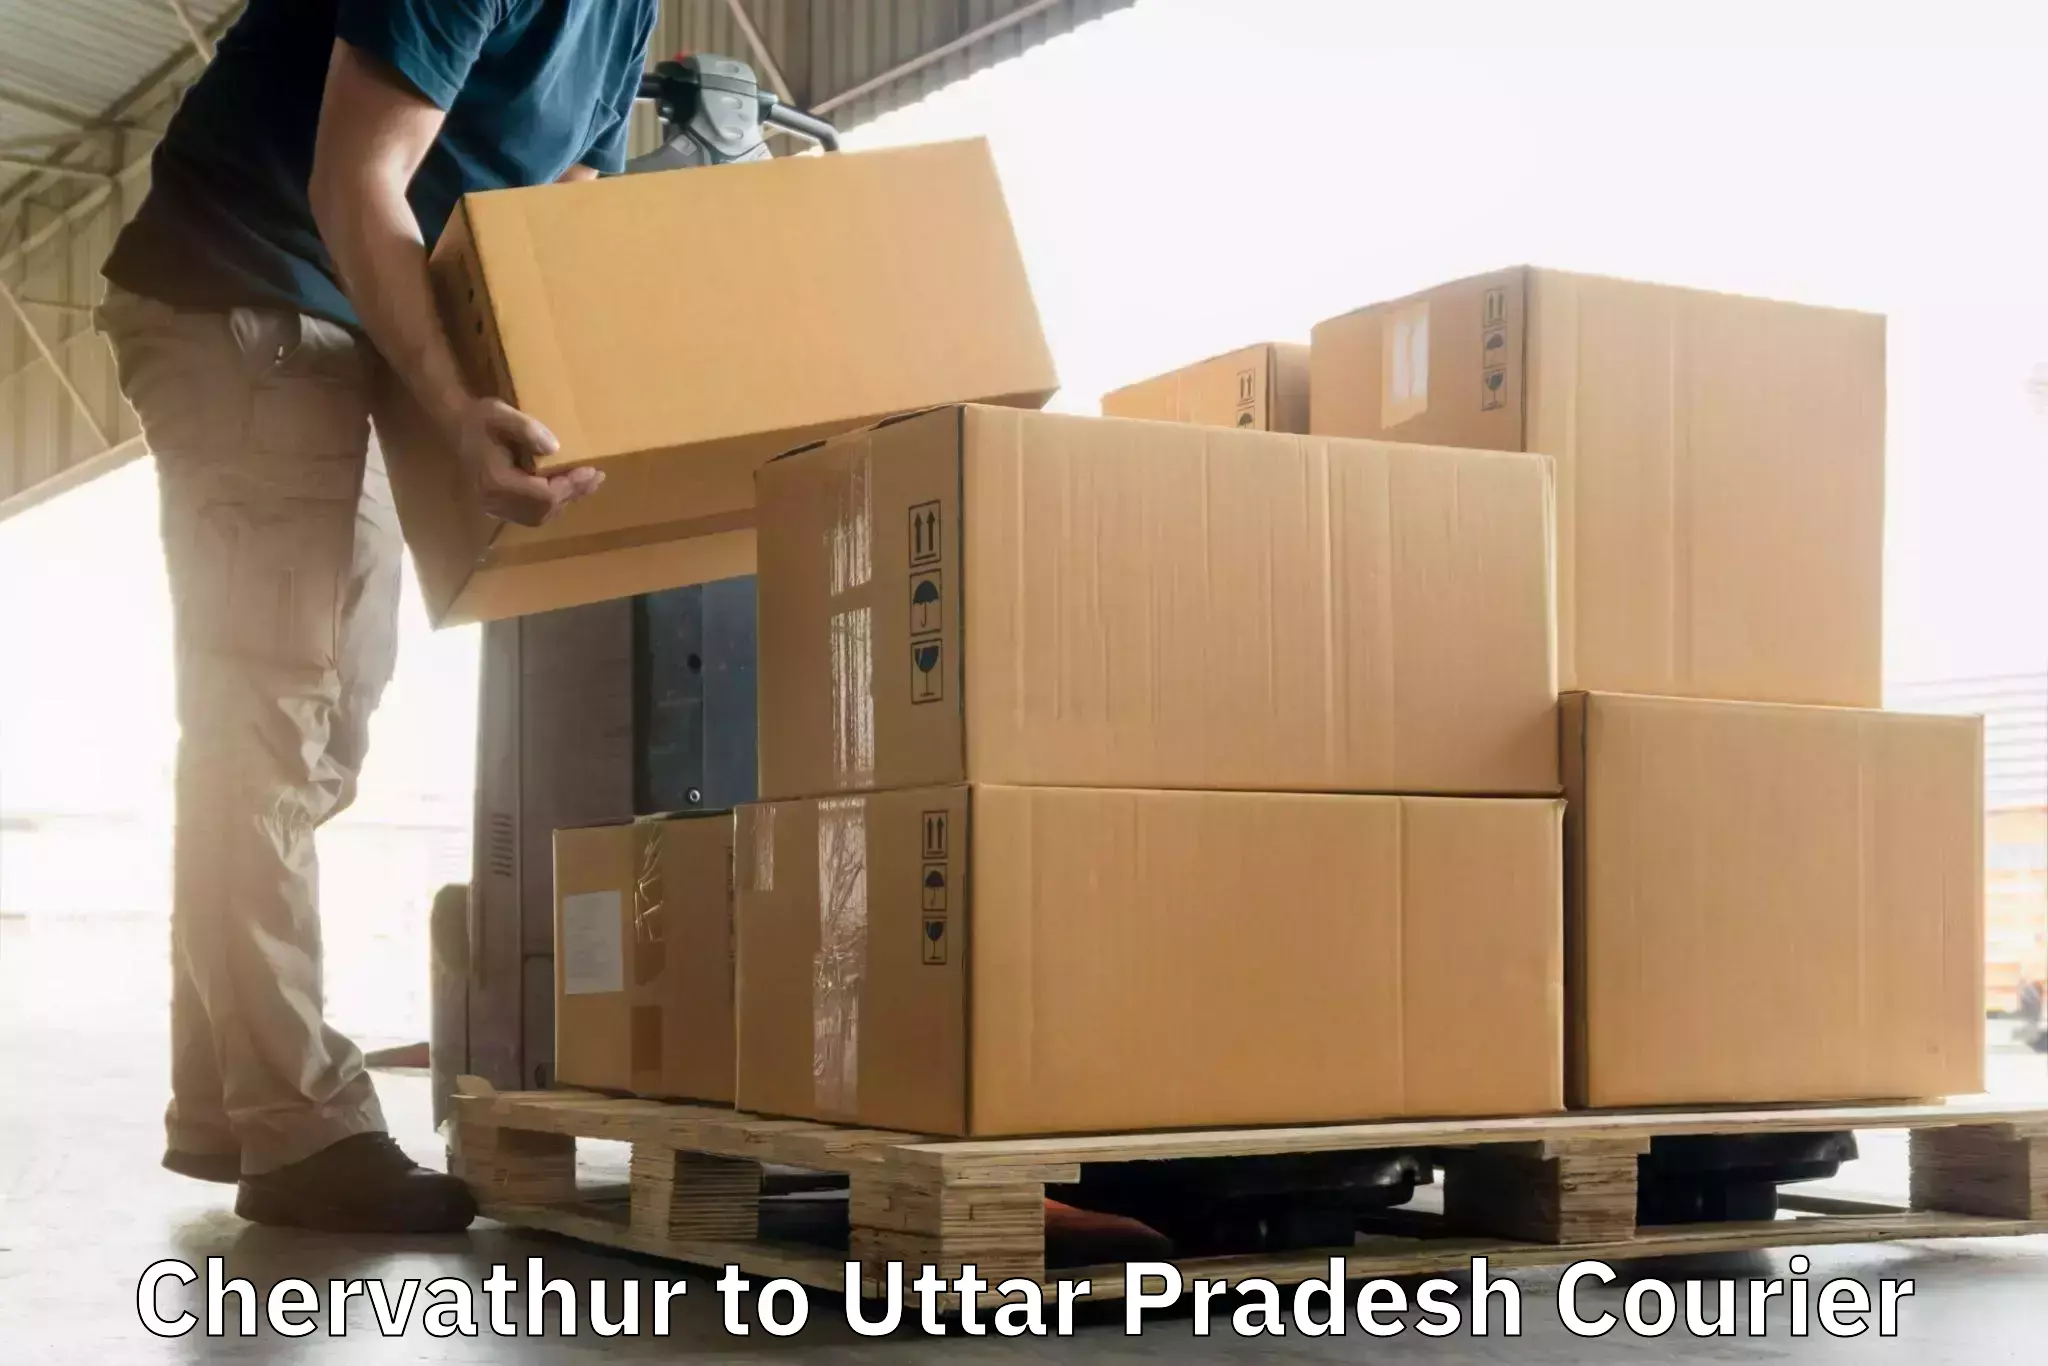 Nationwide delivery network Chervathur to Uttar Pradesh